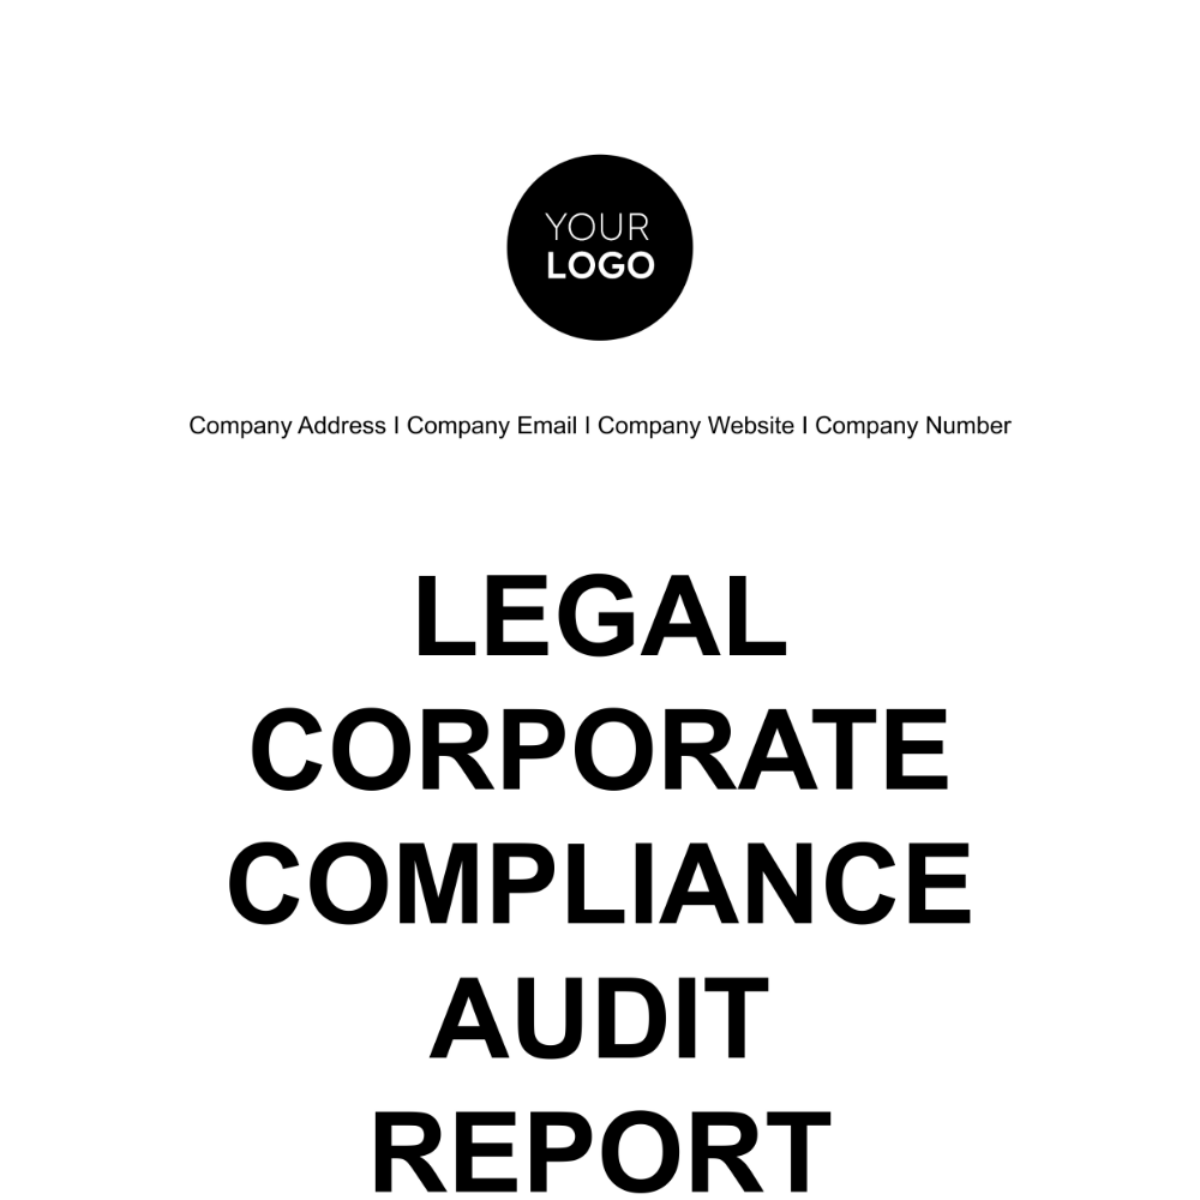 Legal Corporate Compliance Audit Report Template